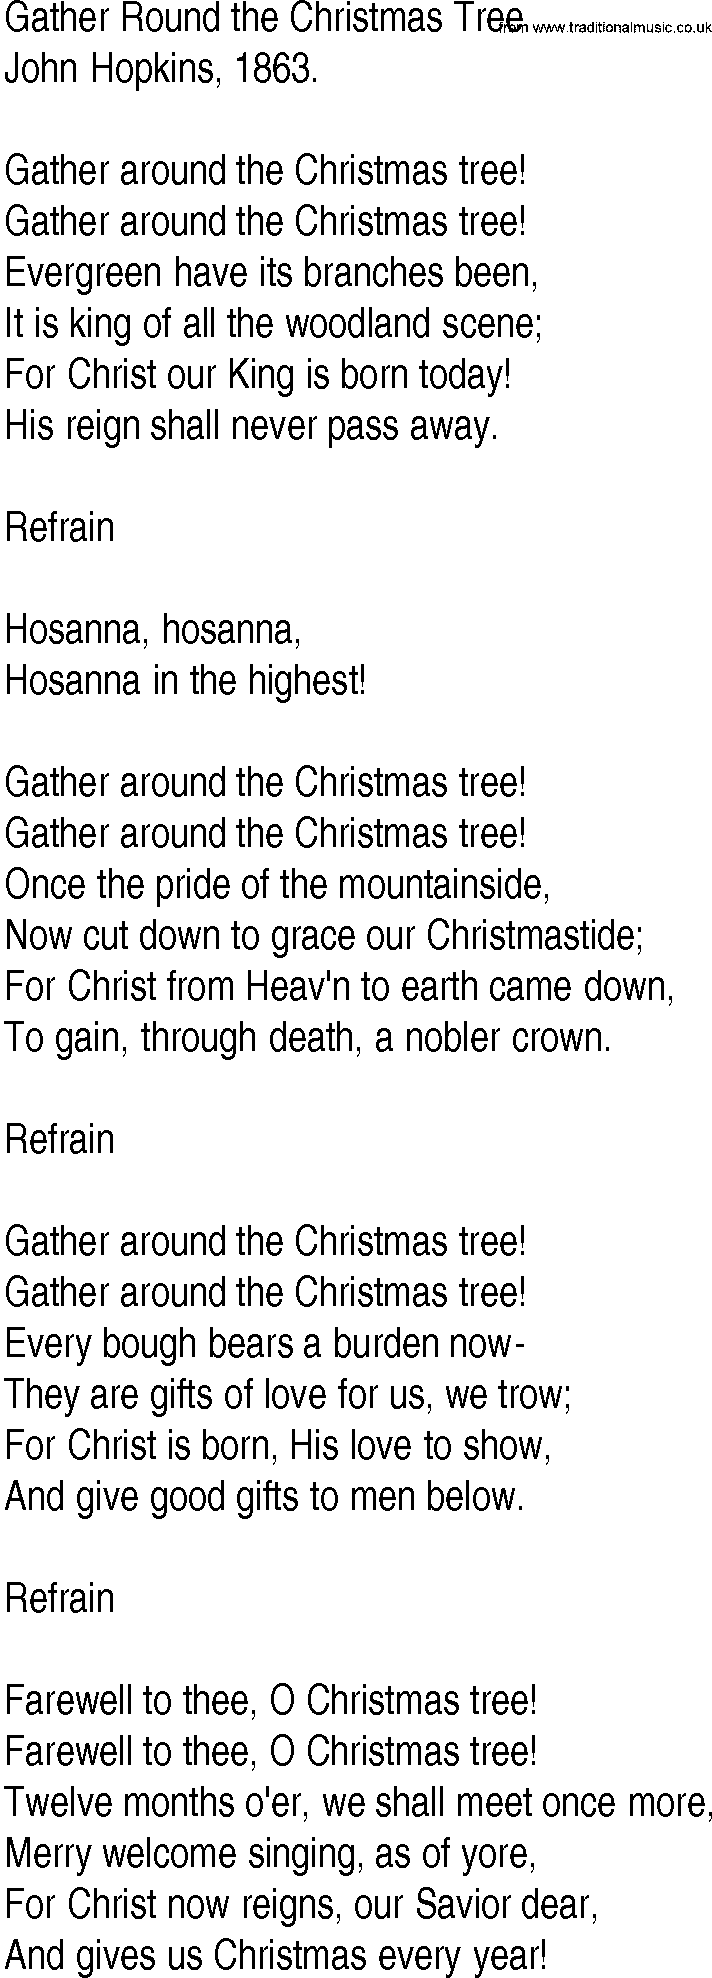 Hymn and Gospel Song: Gather Round the Christmas Tree by John Hopkins lyrics